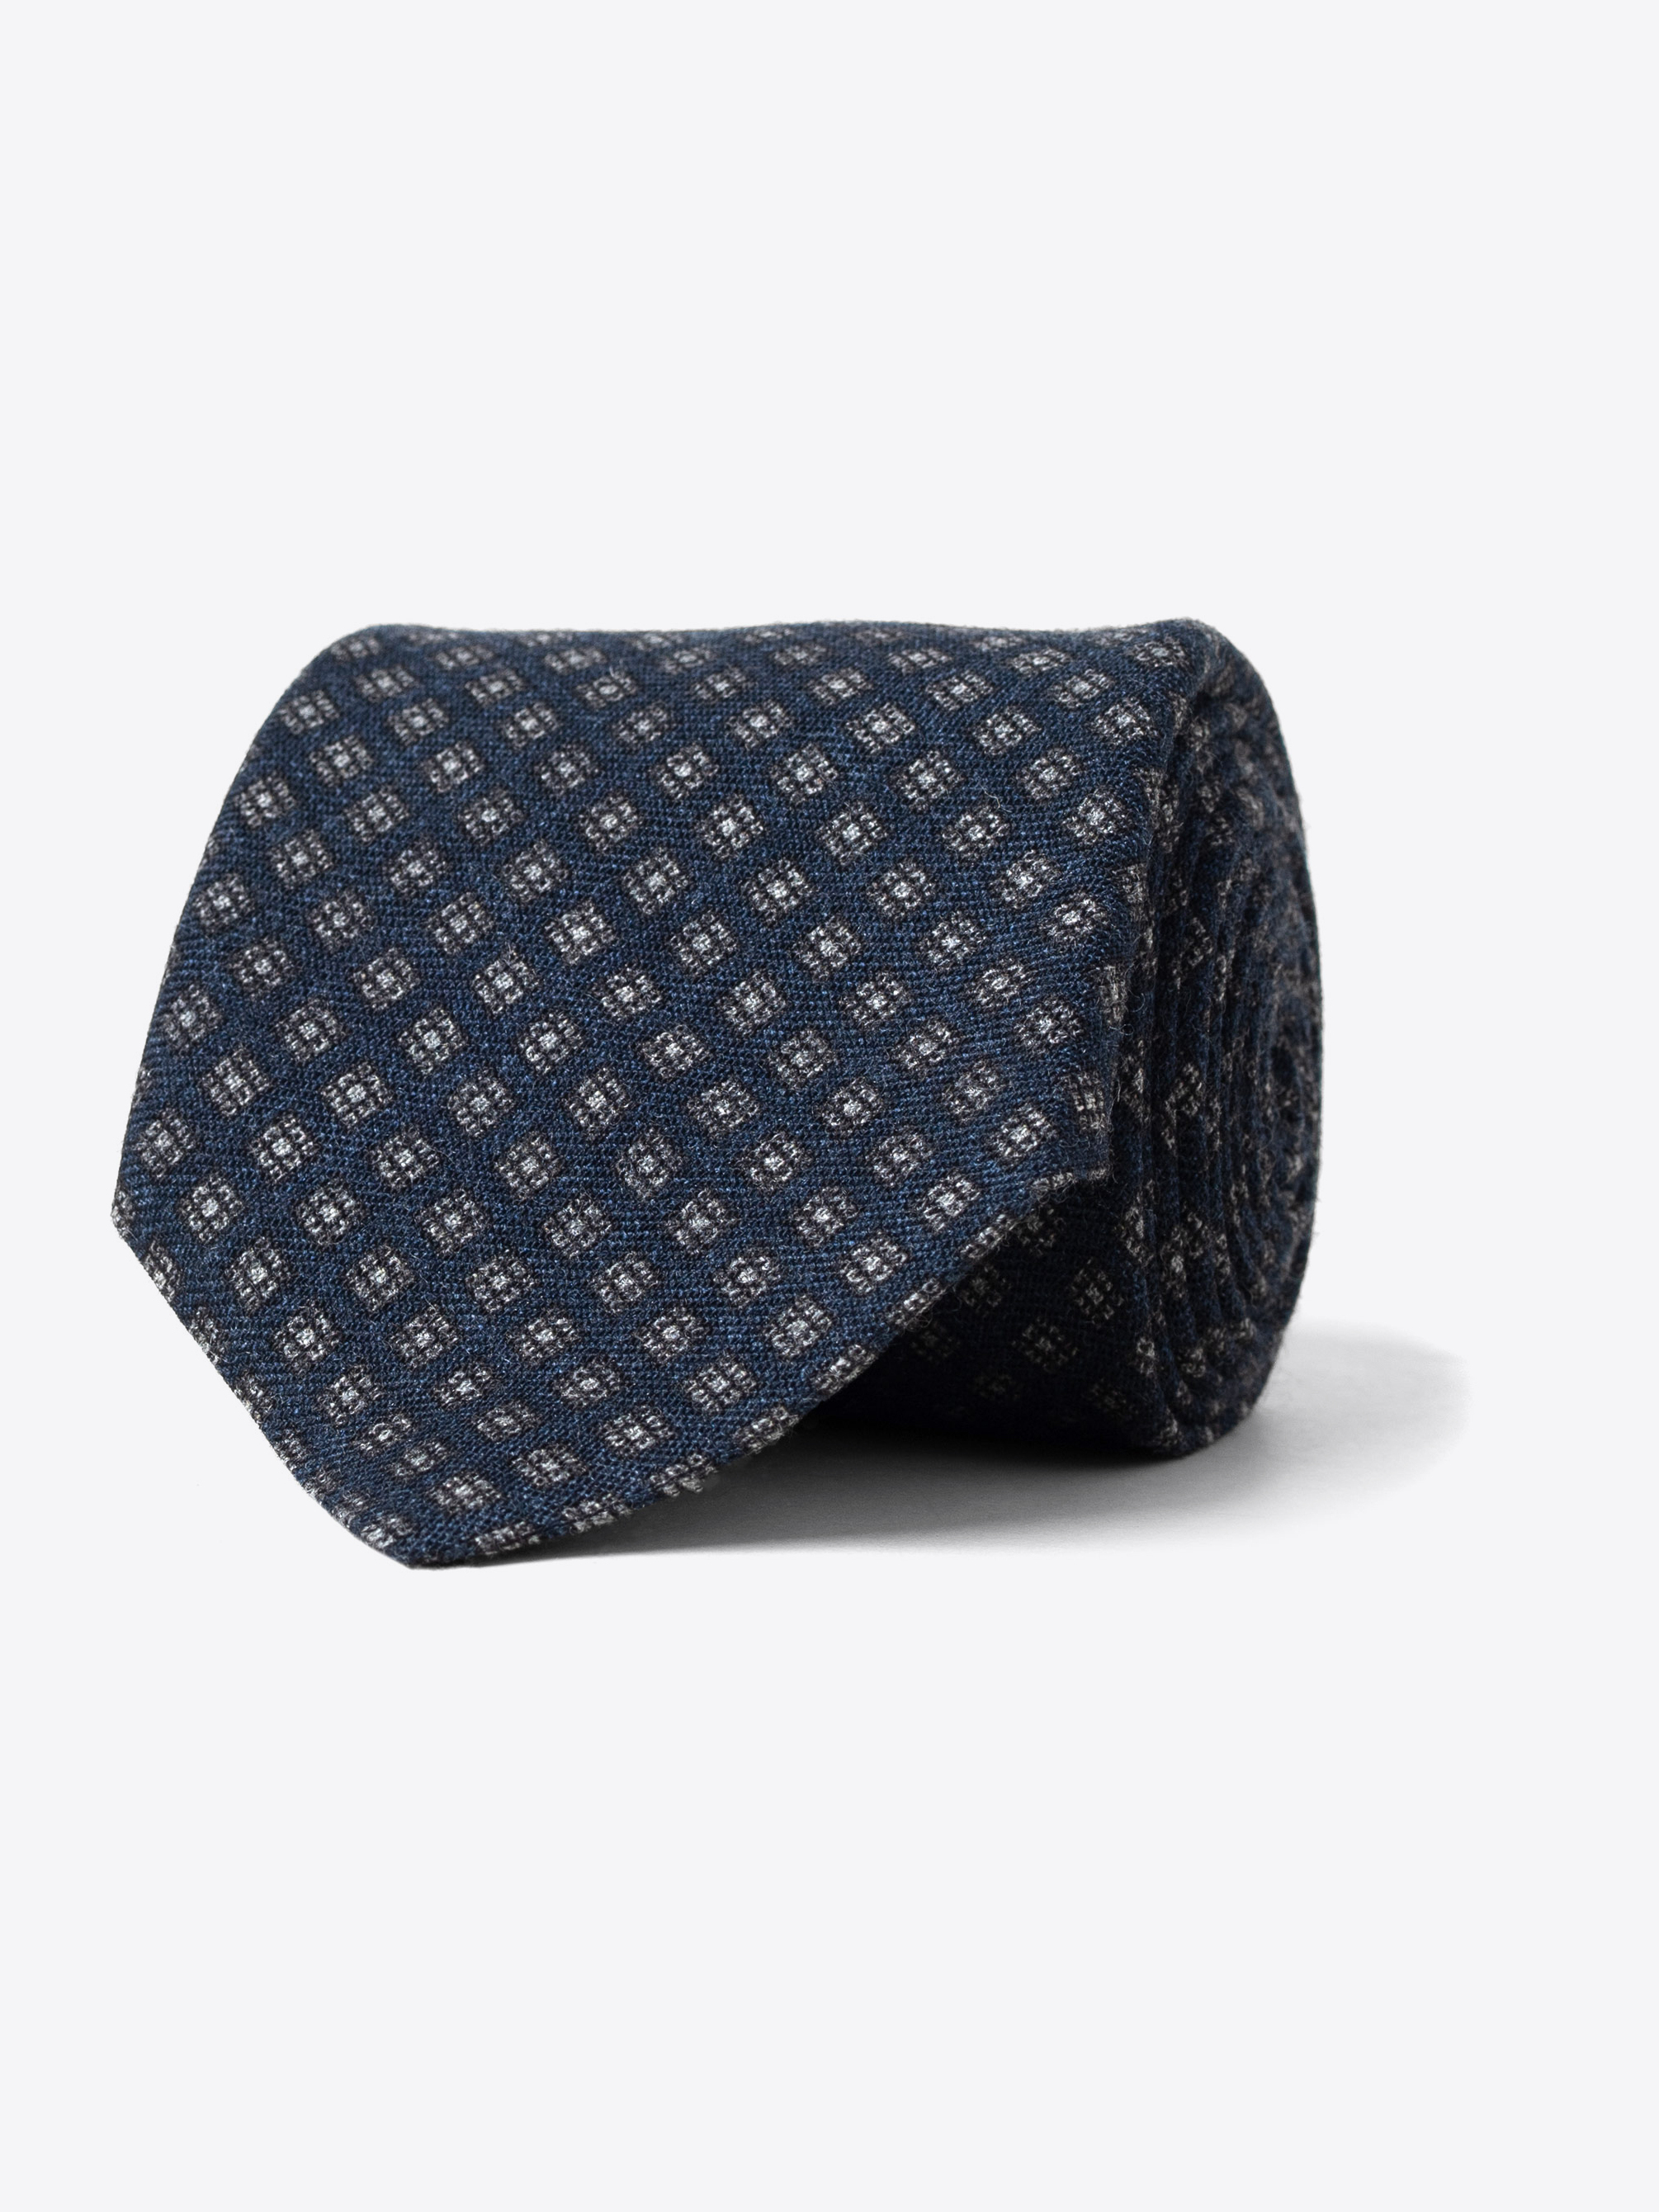 Zoom Image of Navy and Grey Foulard Wool Tie